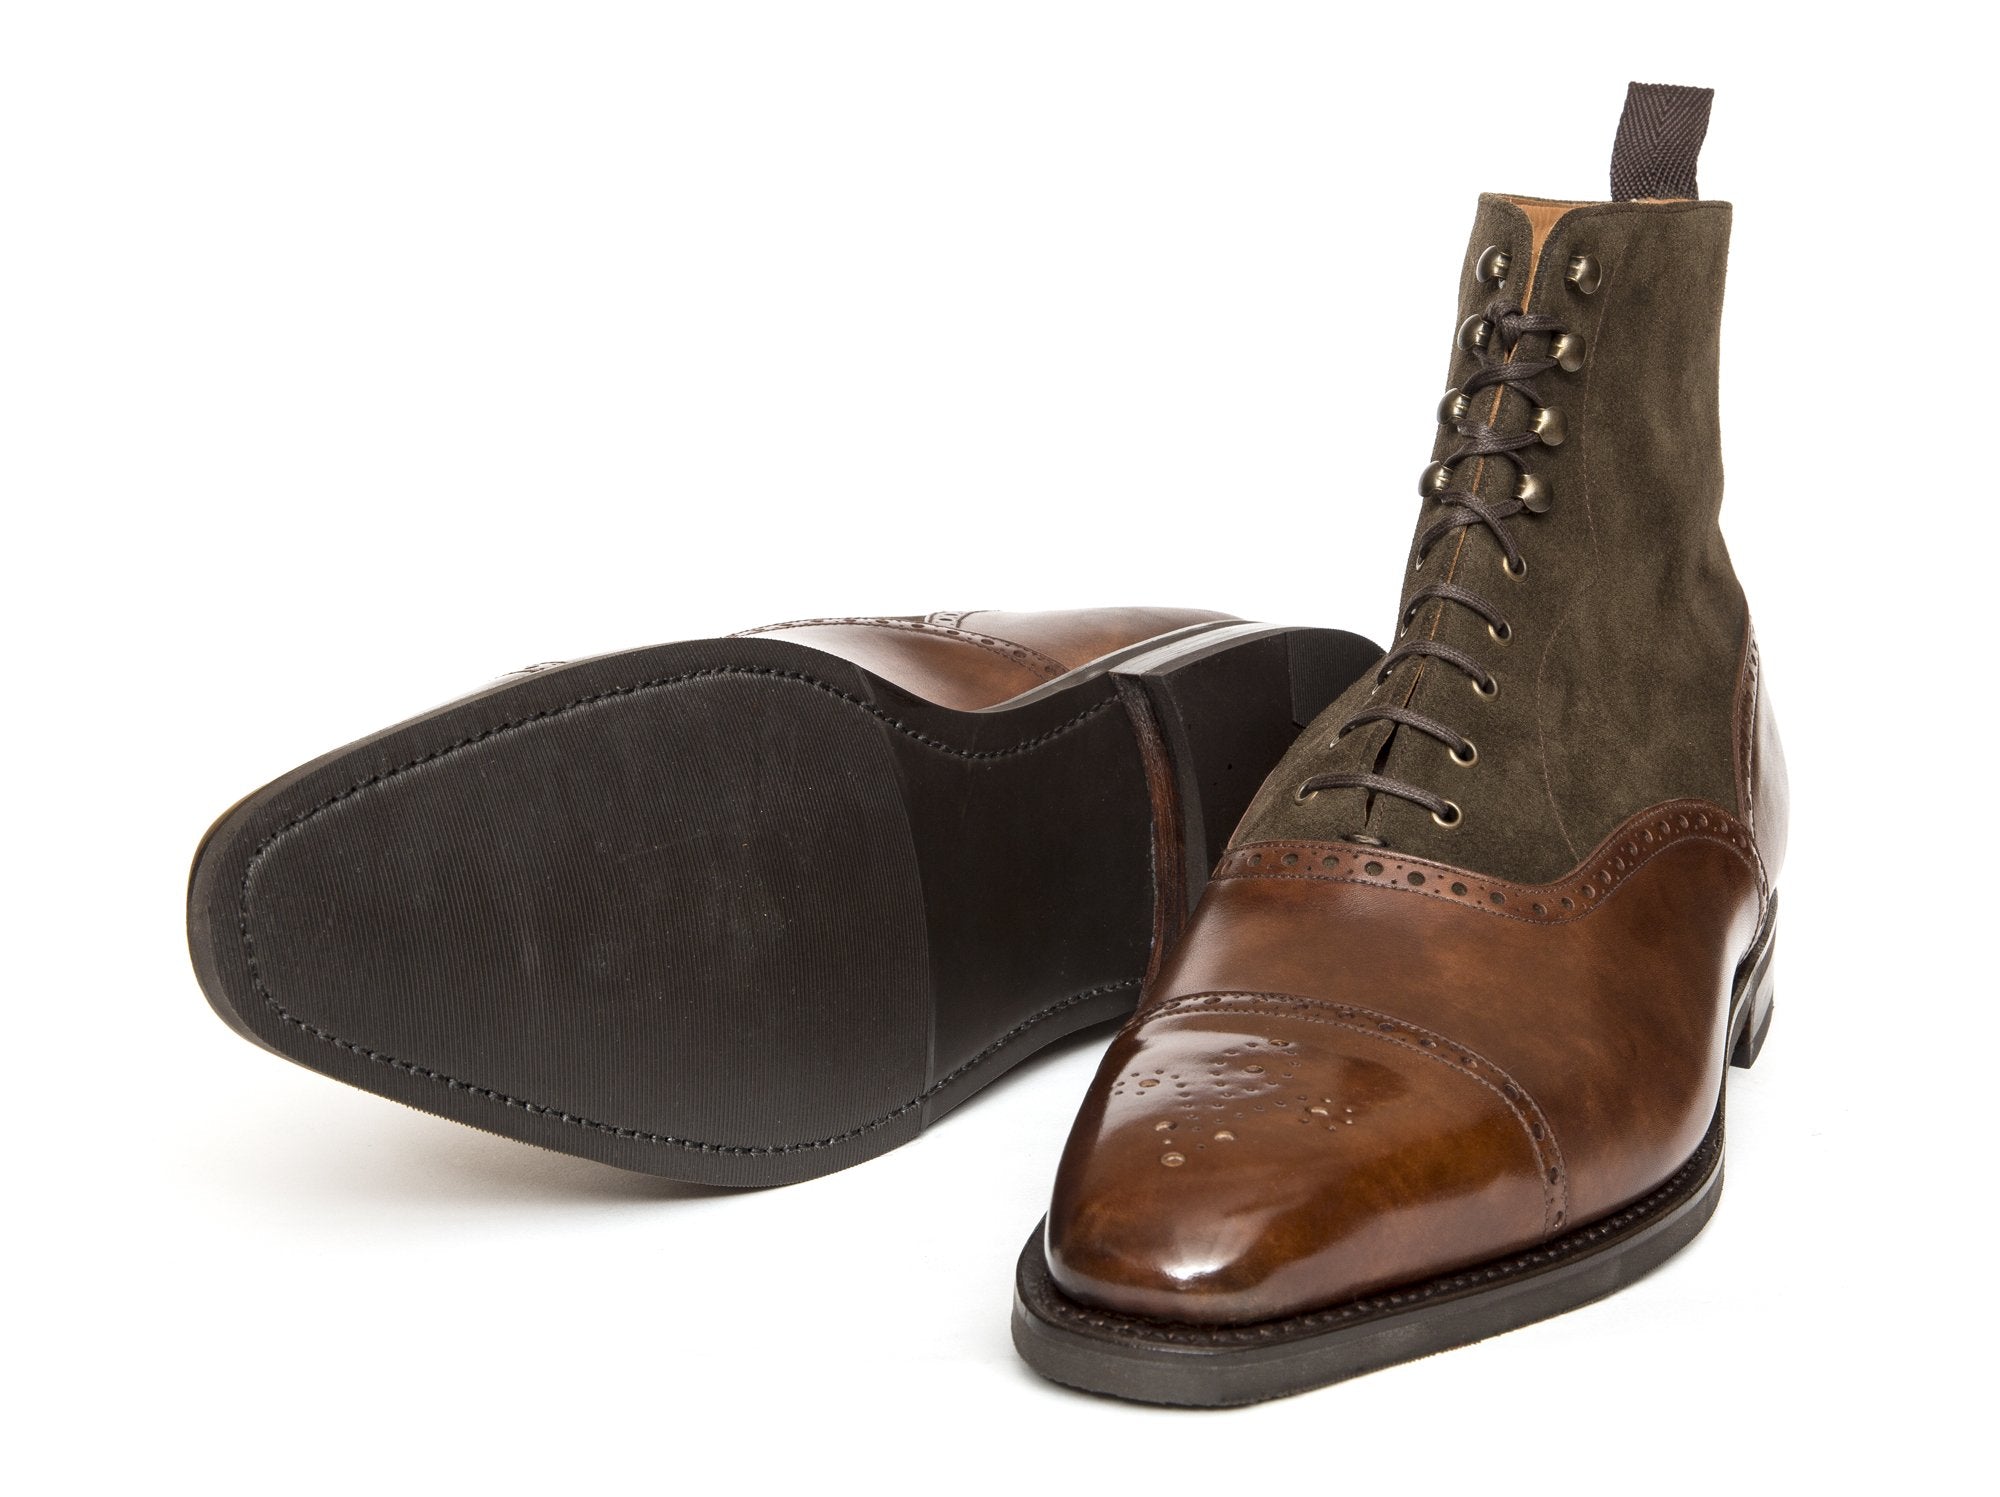 J.FitzPatrick Footwear - David - Walnut Museum Calf / Moss Suede - LPB last - City Rubber Sole